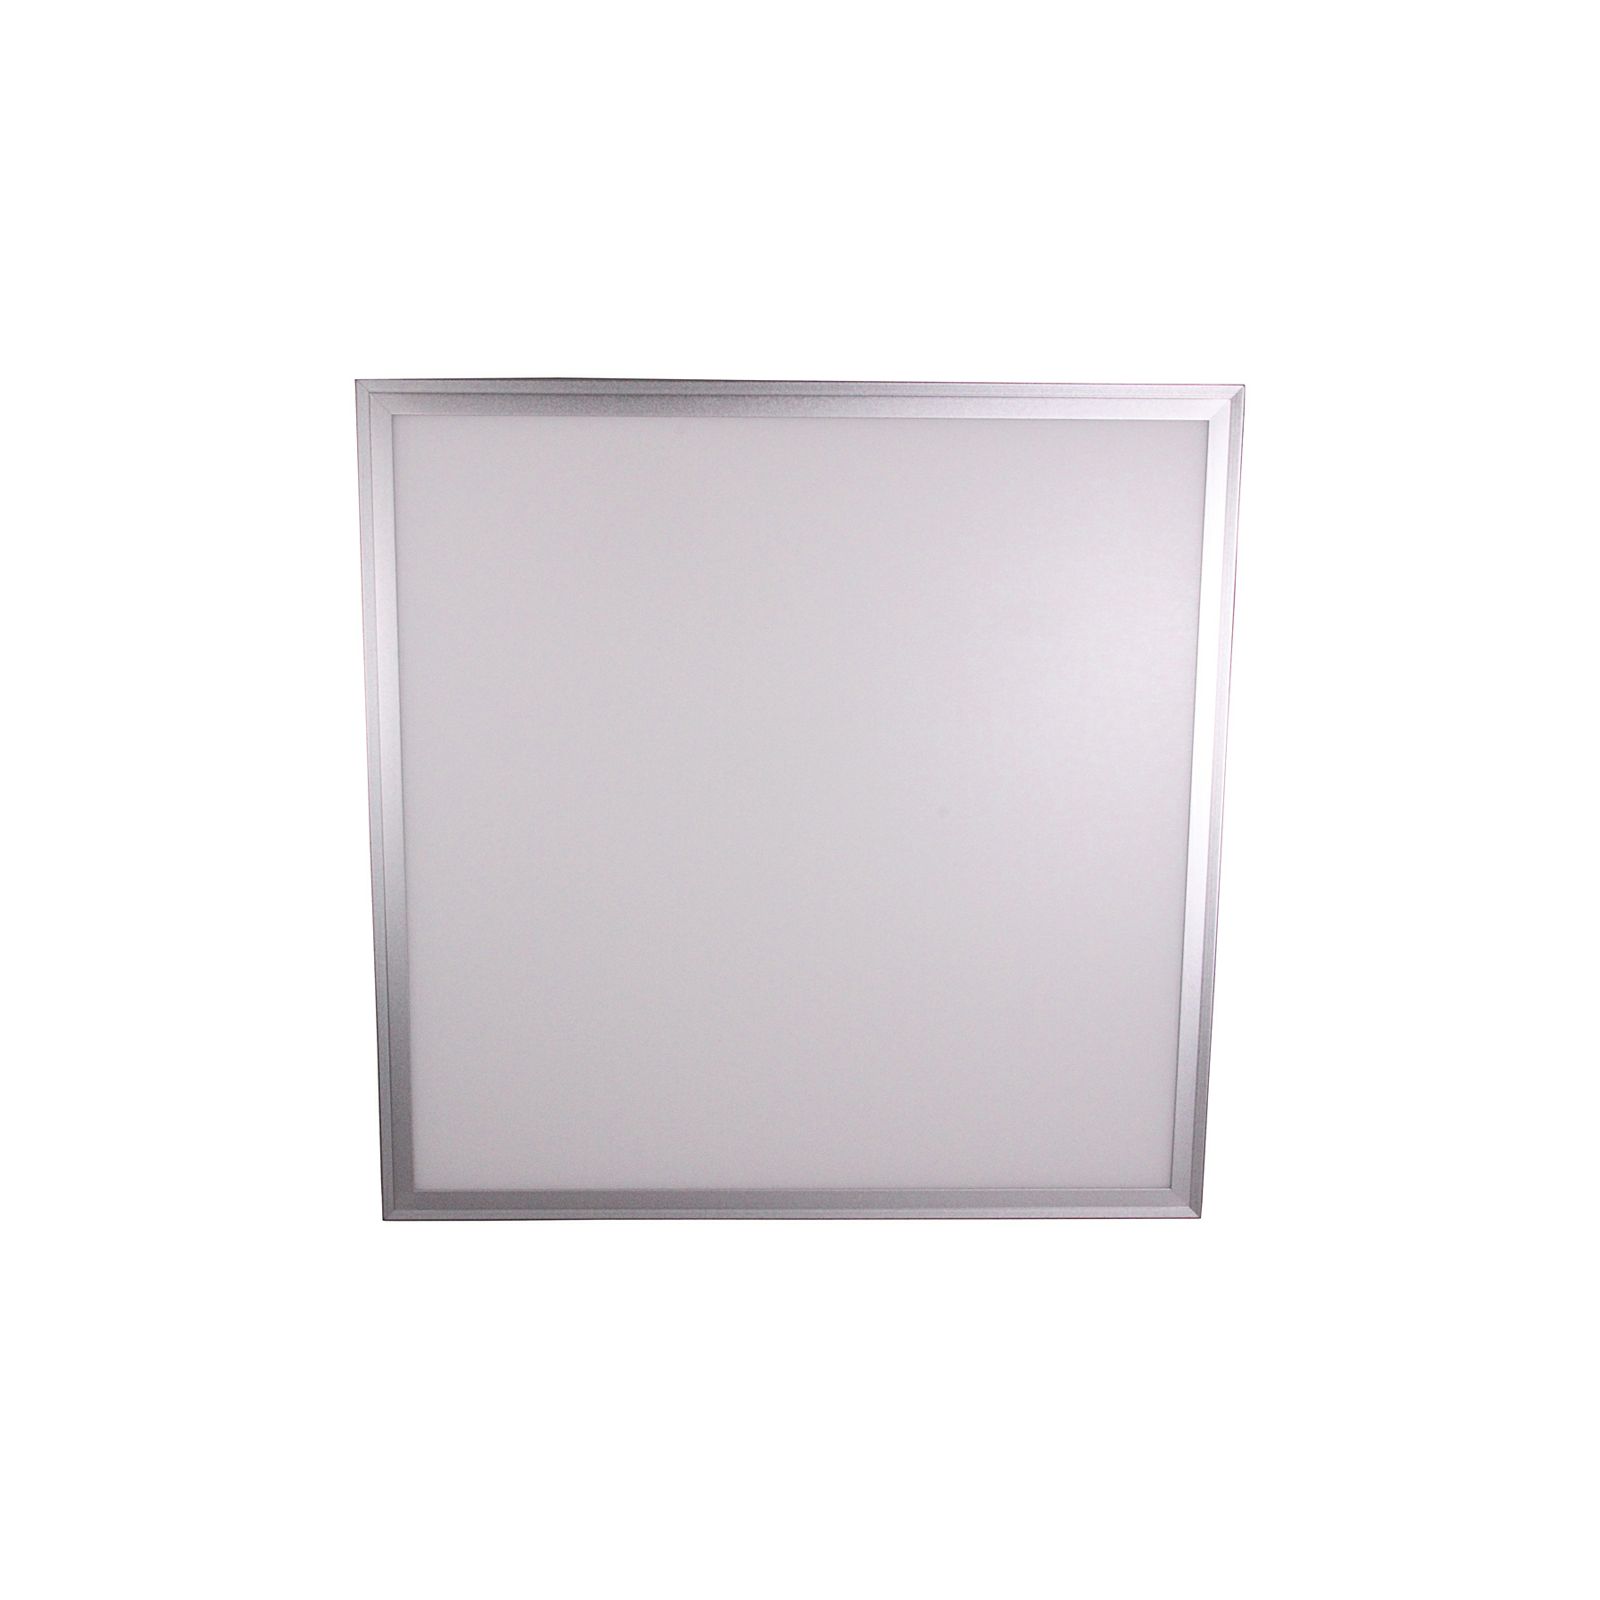 Patona LED panel 600x600x9 frame trasnformer 36W 3300lm 4000-4500K natur white AC 200-240V Frame dimmable Transformer complet set 60x60x0,9cm